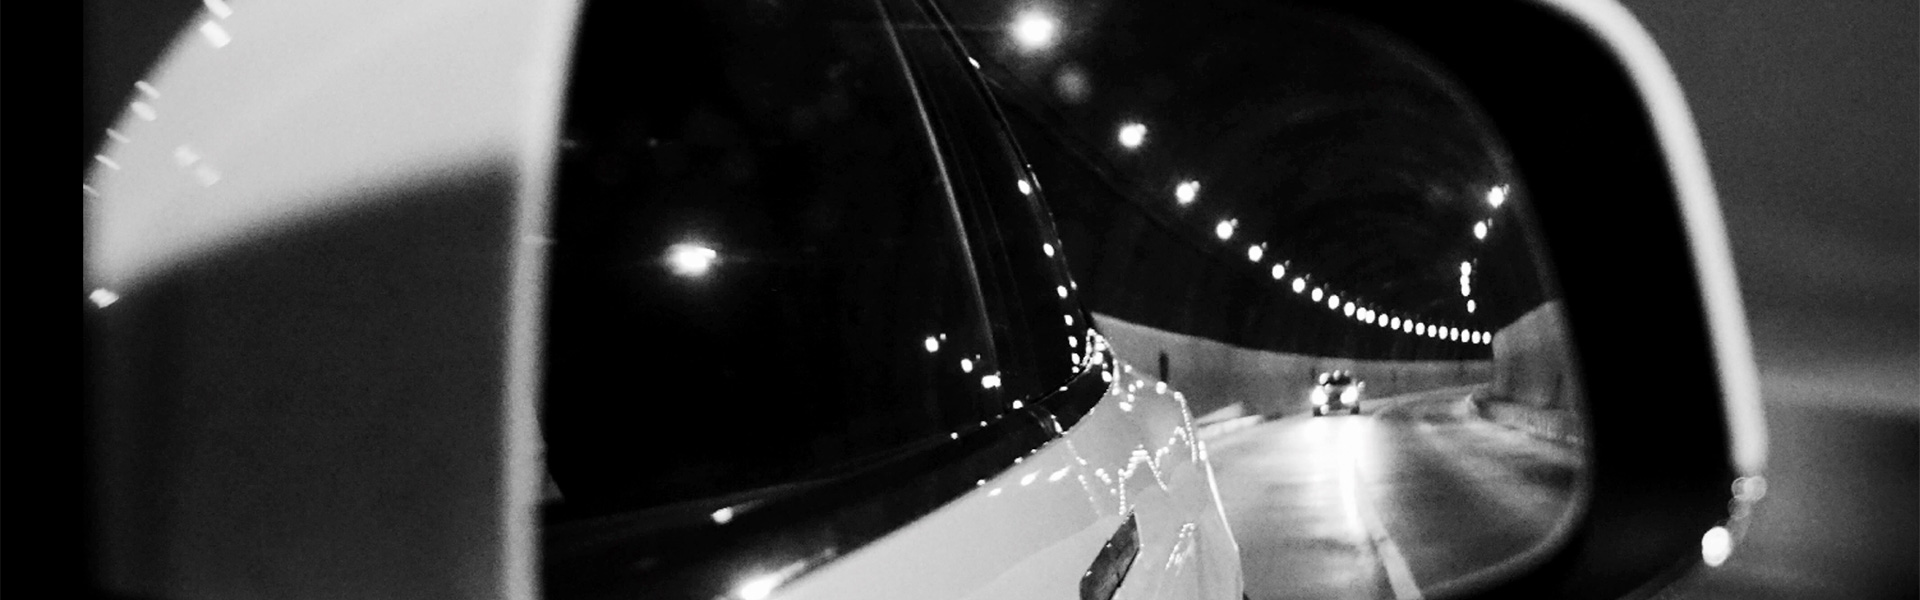 Car wing mirror